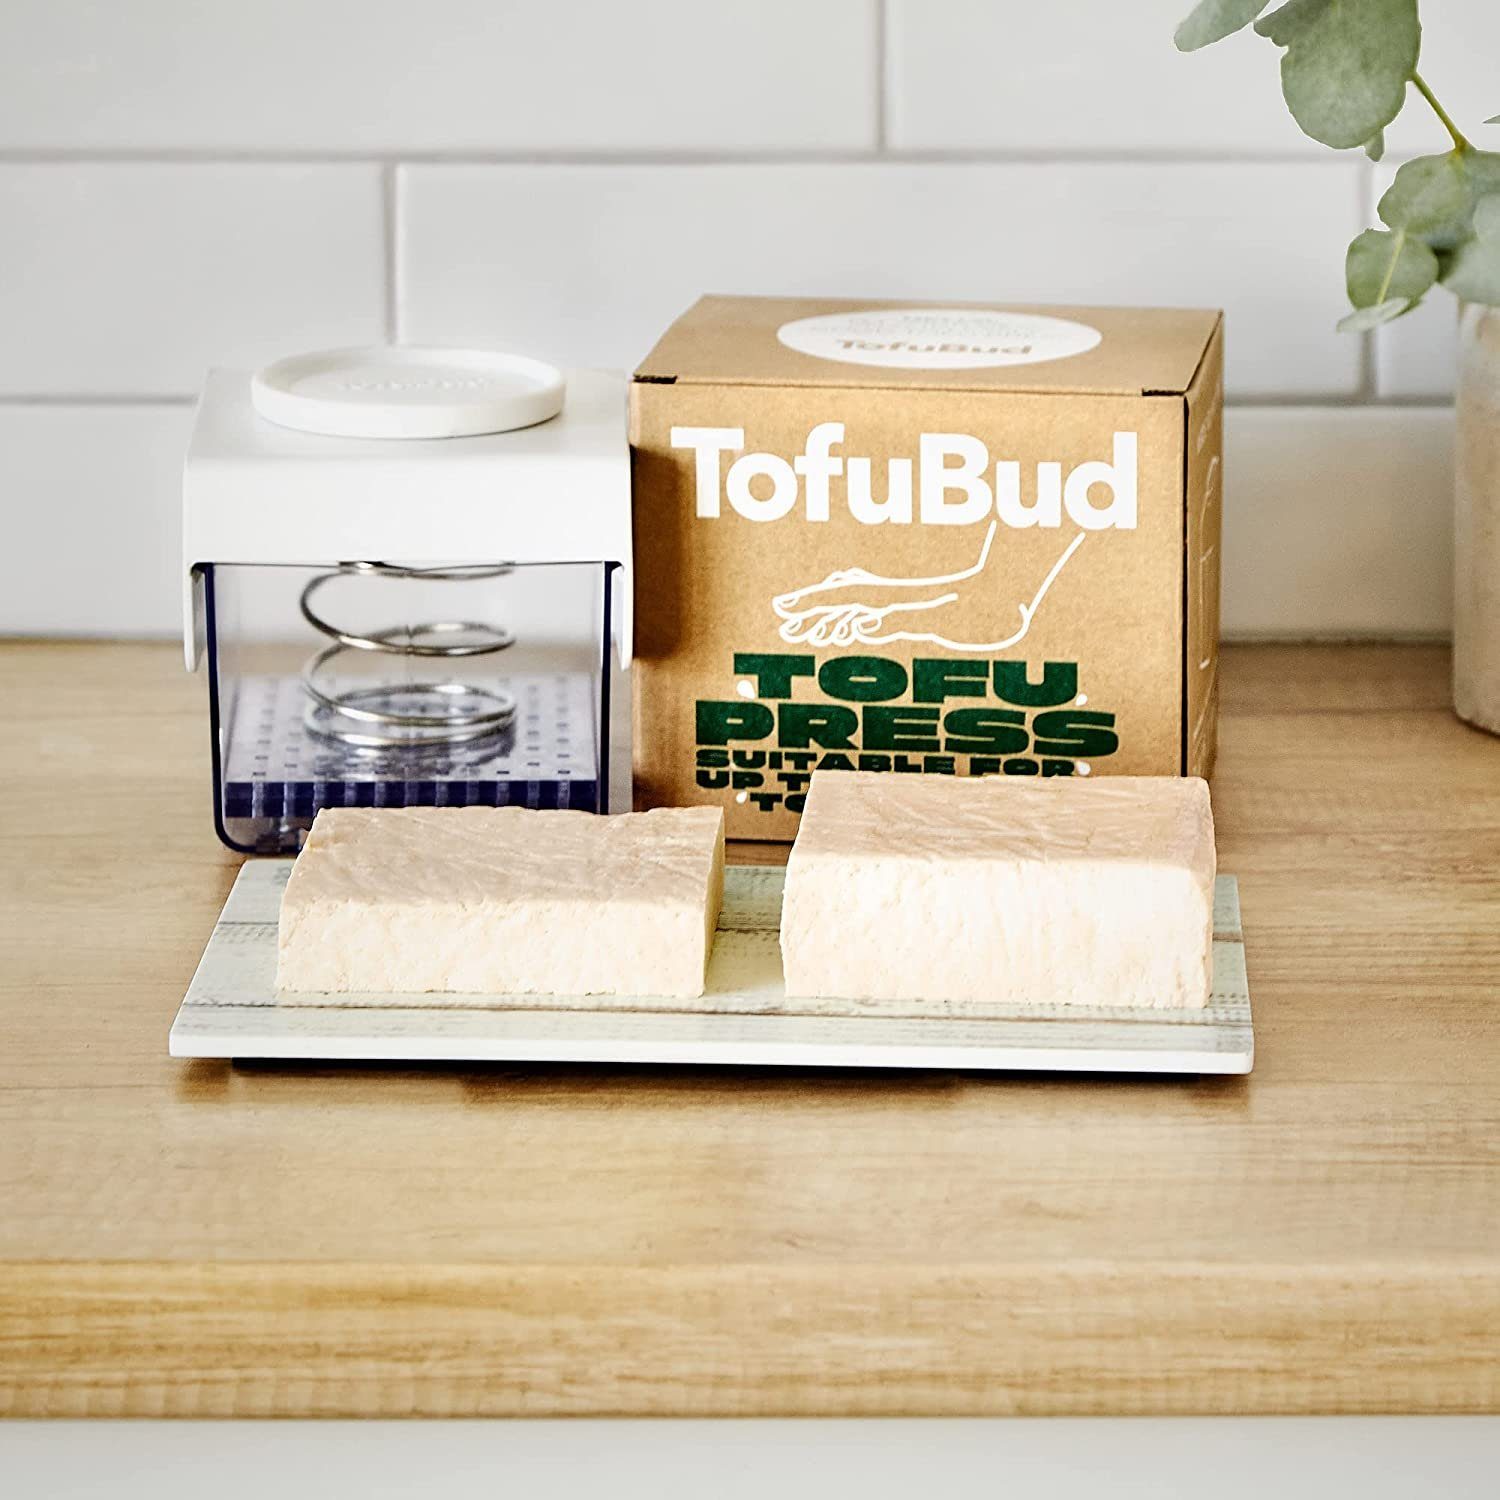 Maker für extra Tofu festen Tofubud oder Tofu Gebäckpresse festen Tofupresse